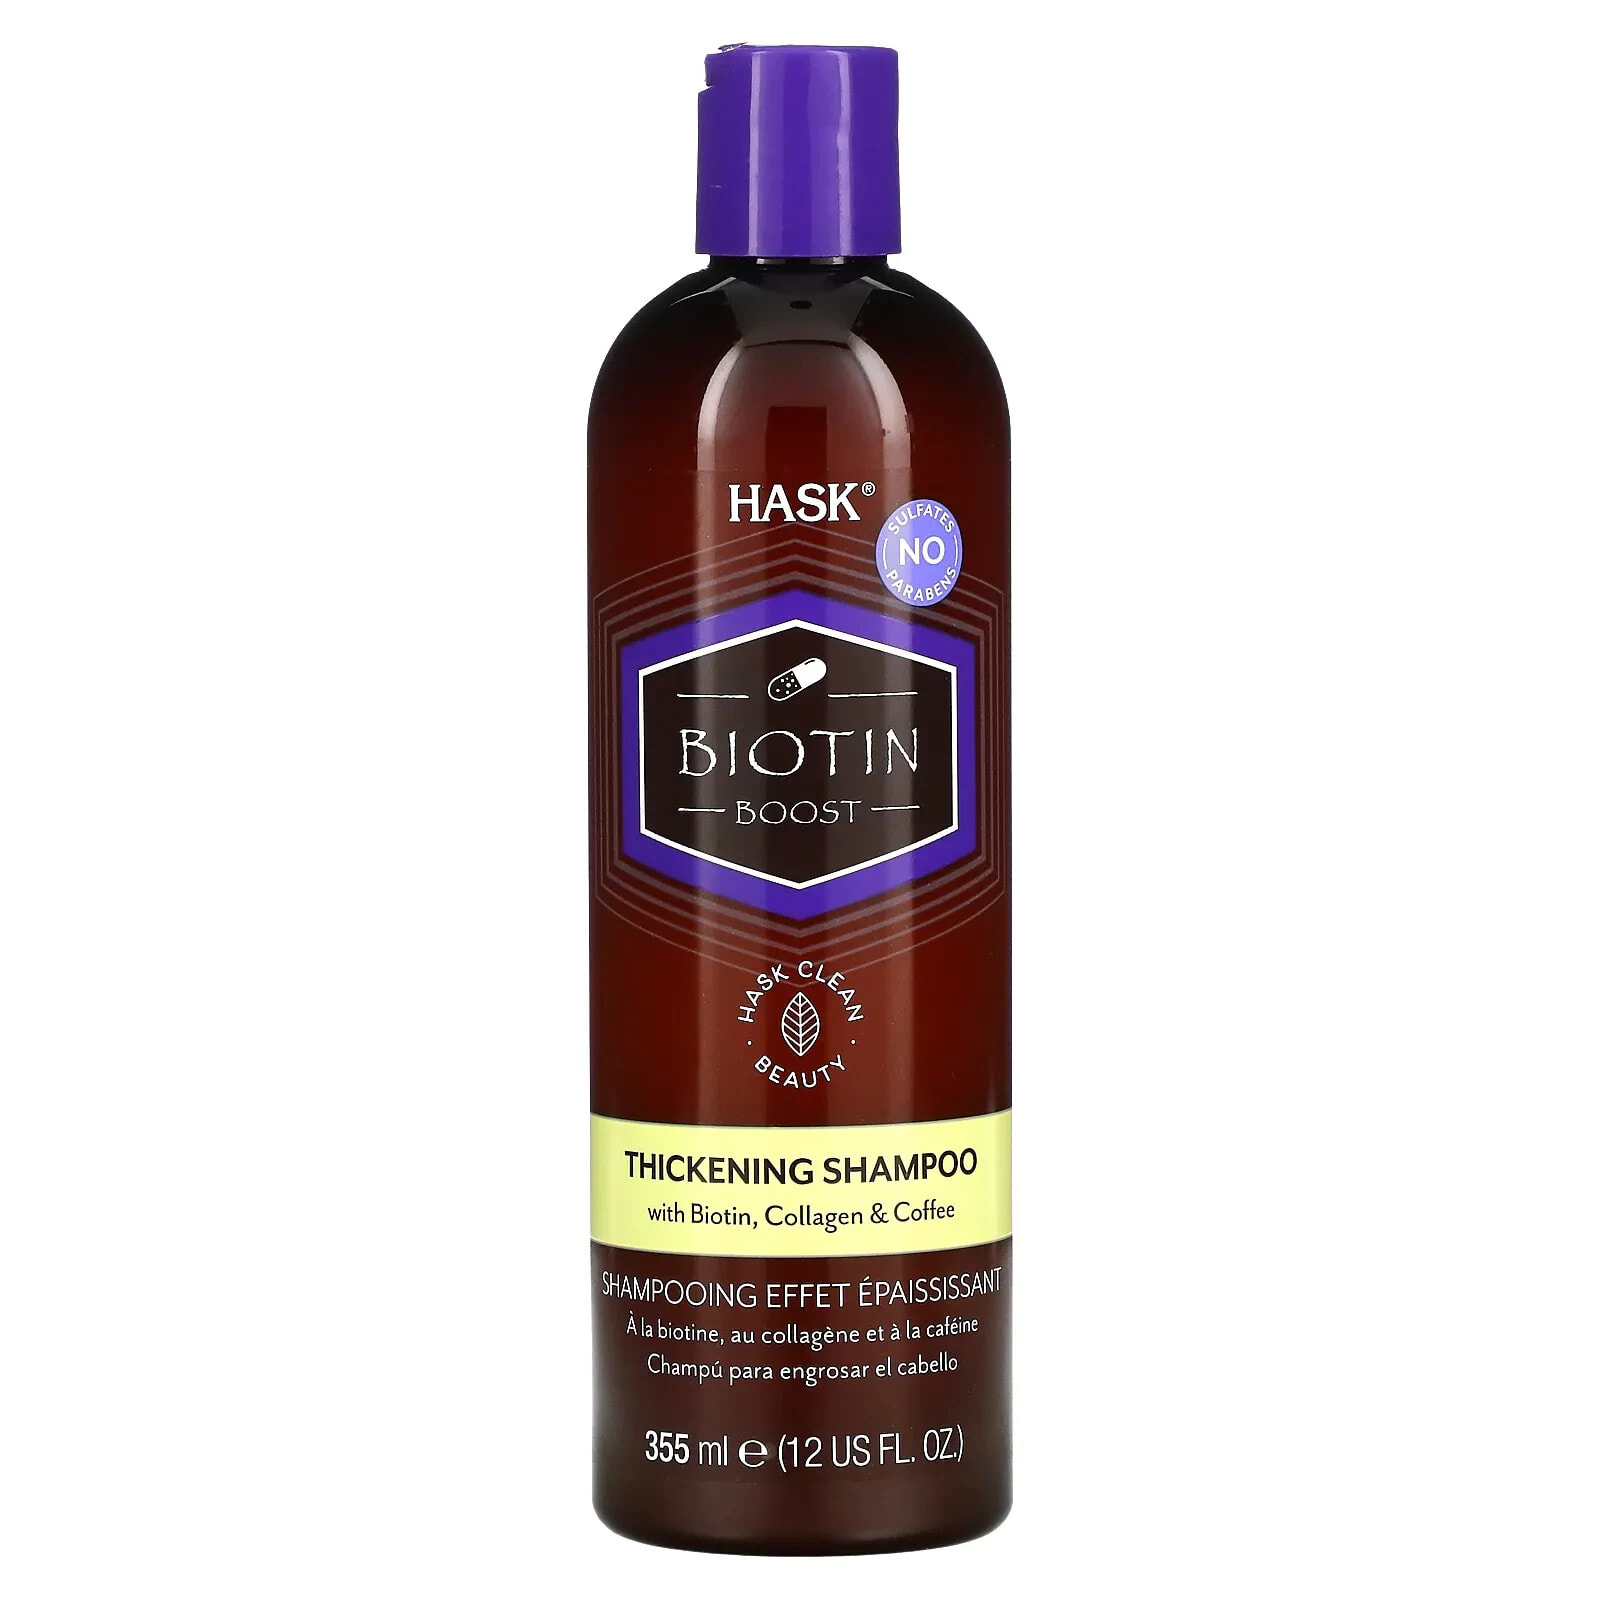 Hask Biotin Boost Thickening Shampoo Уплотняющий шампунь для тонких волос, с биотином 355 мл